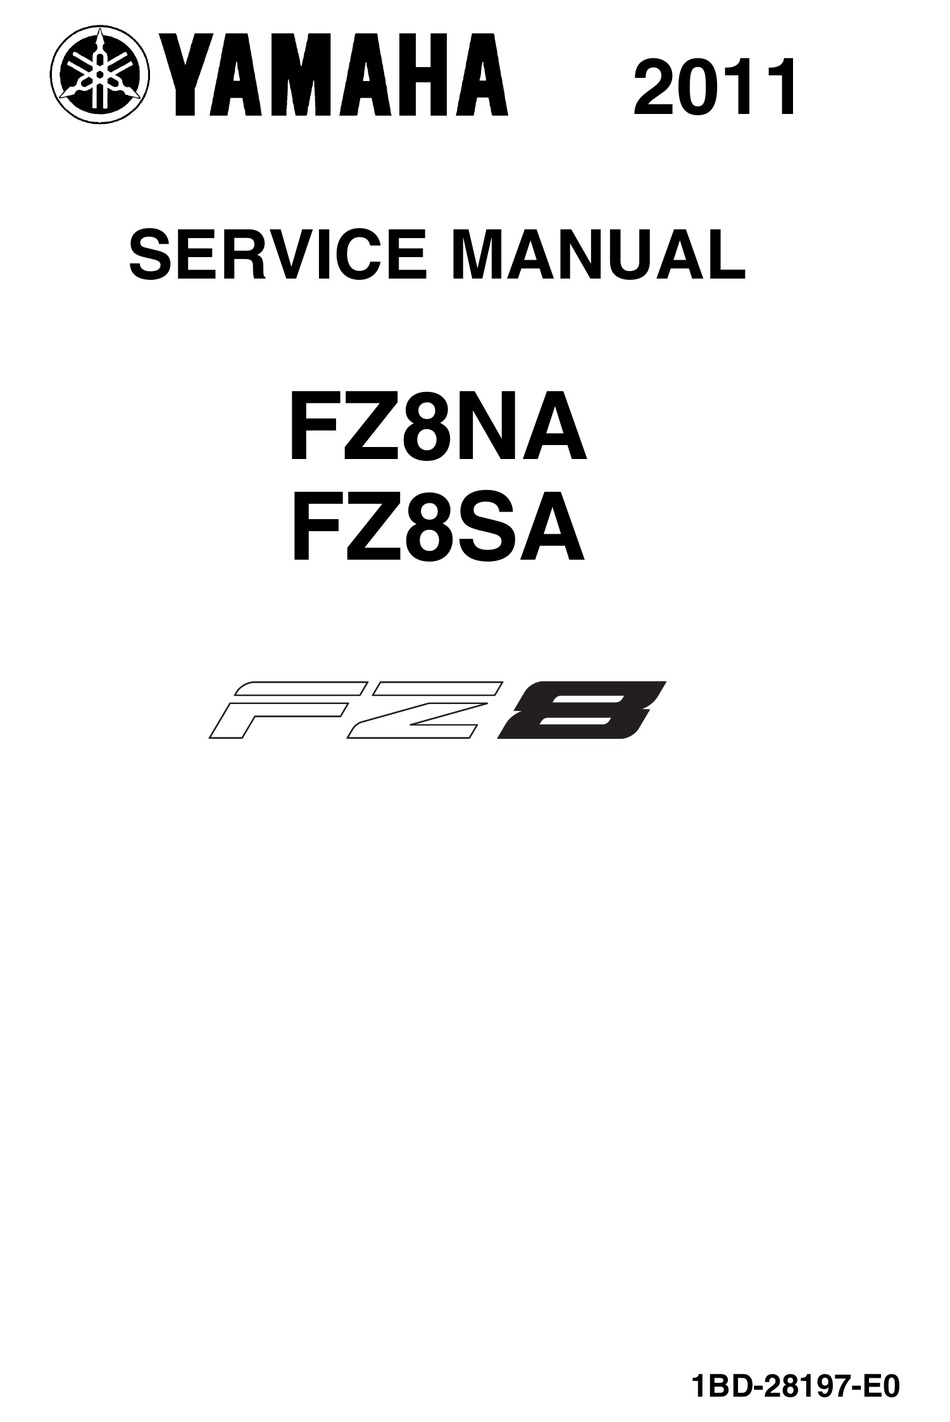 Yamaha Fz8 Wiring Diagram Wiring Diagrams Options Dry Maniac Dry Maniac Doc3d It